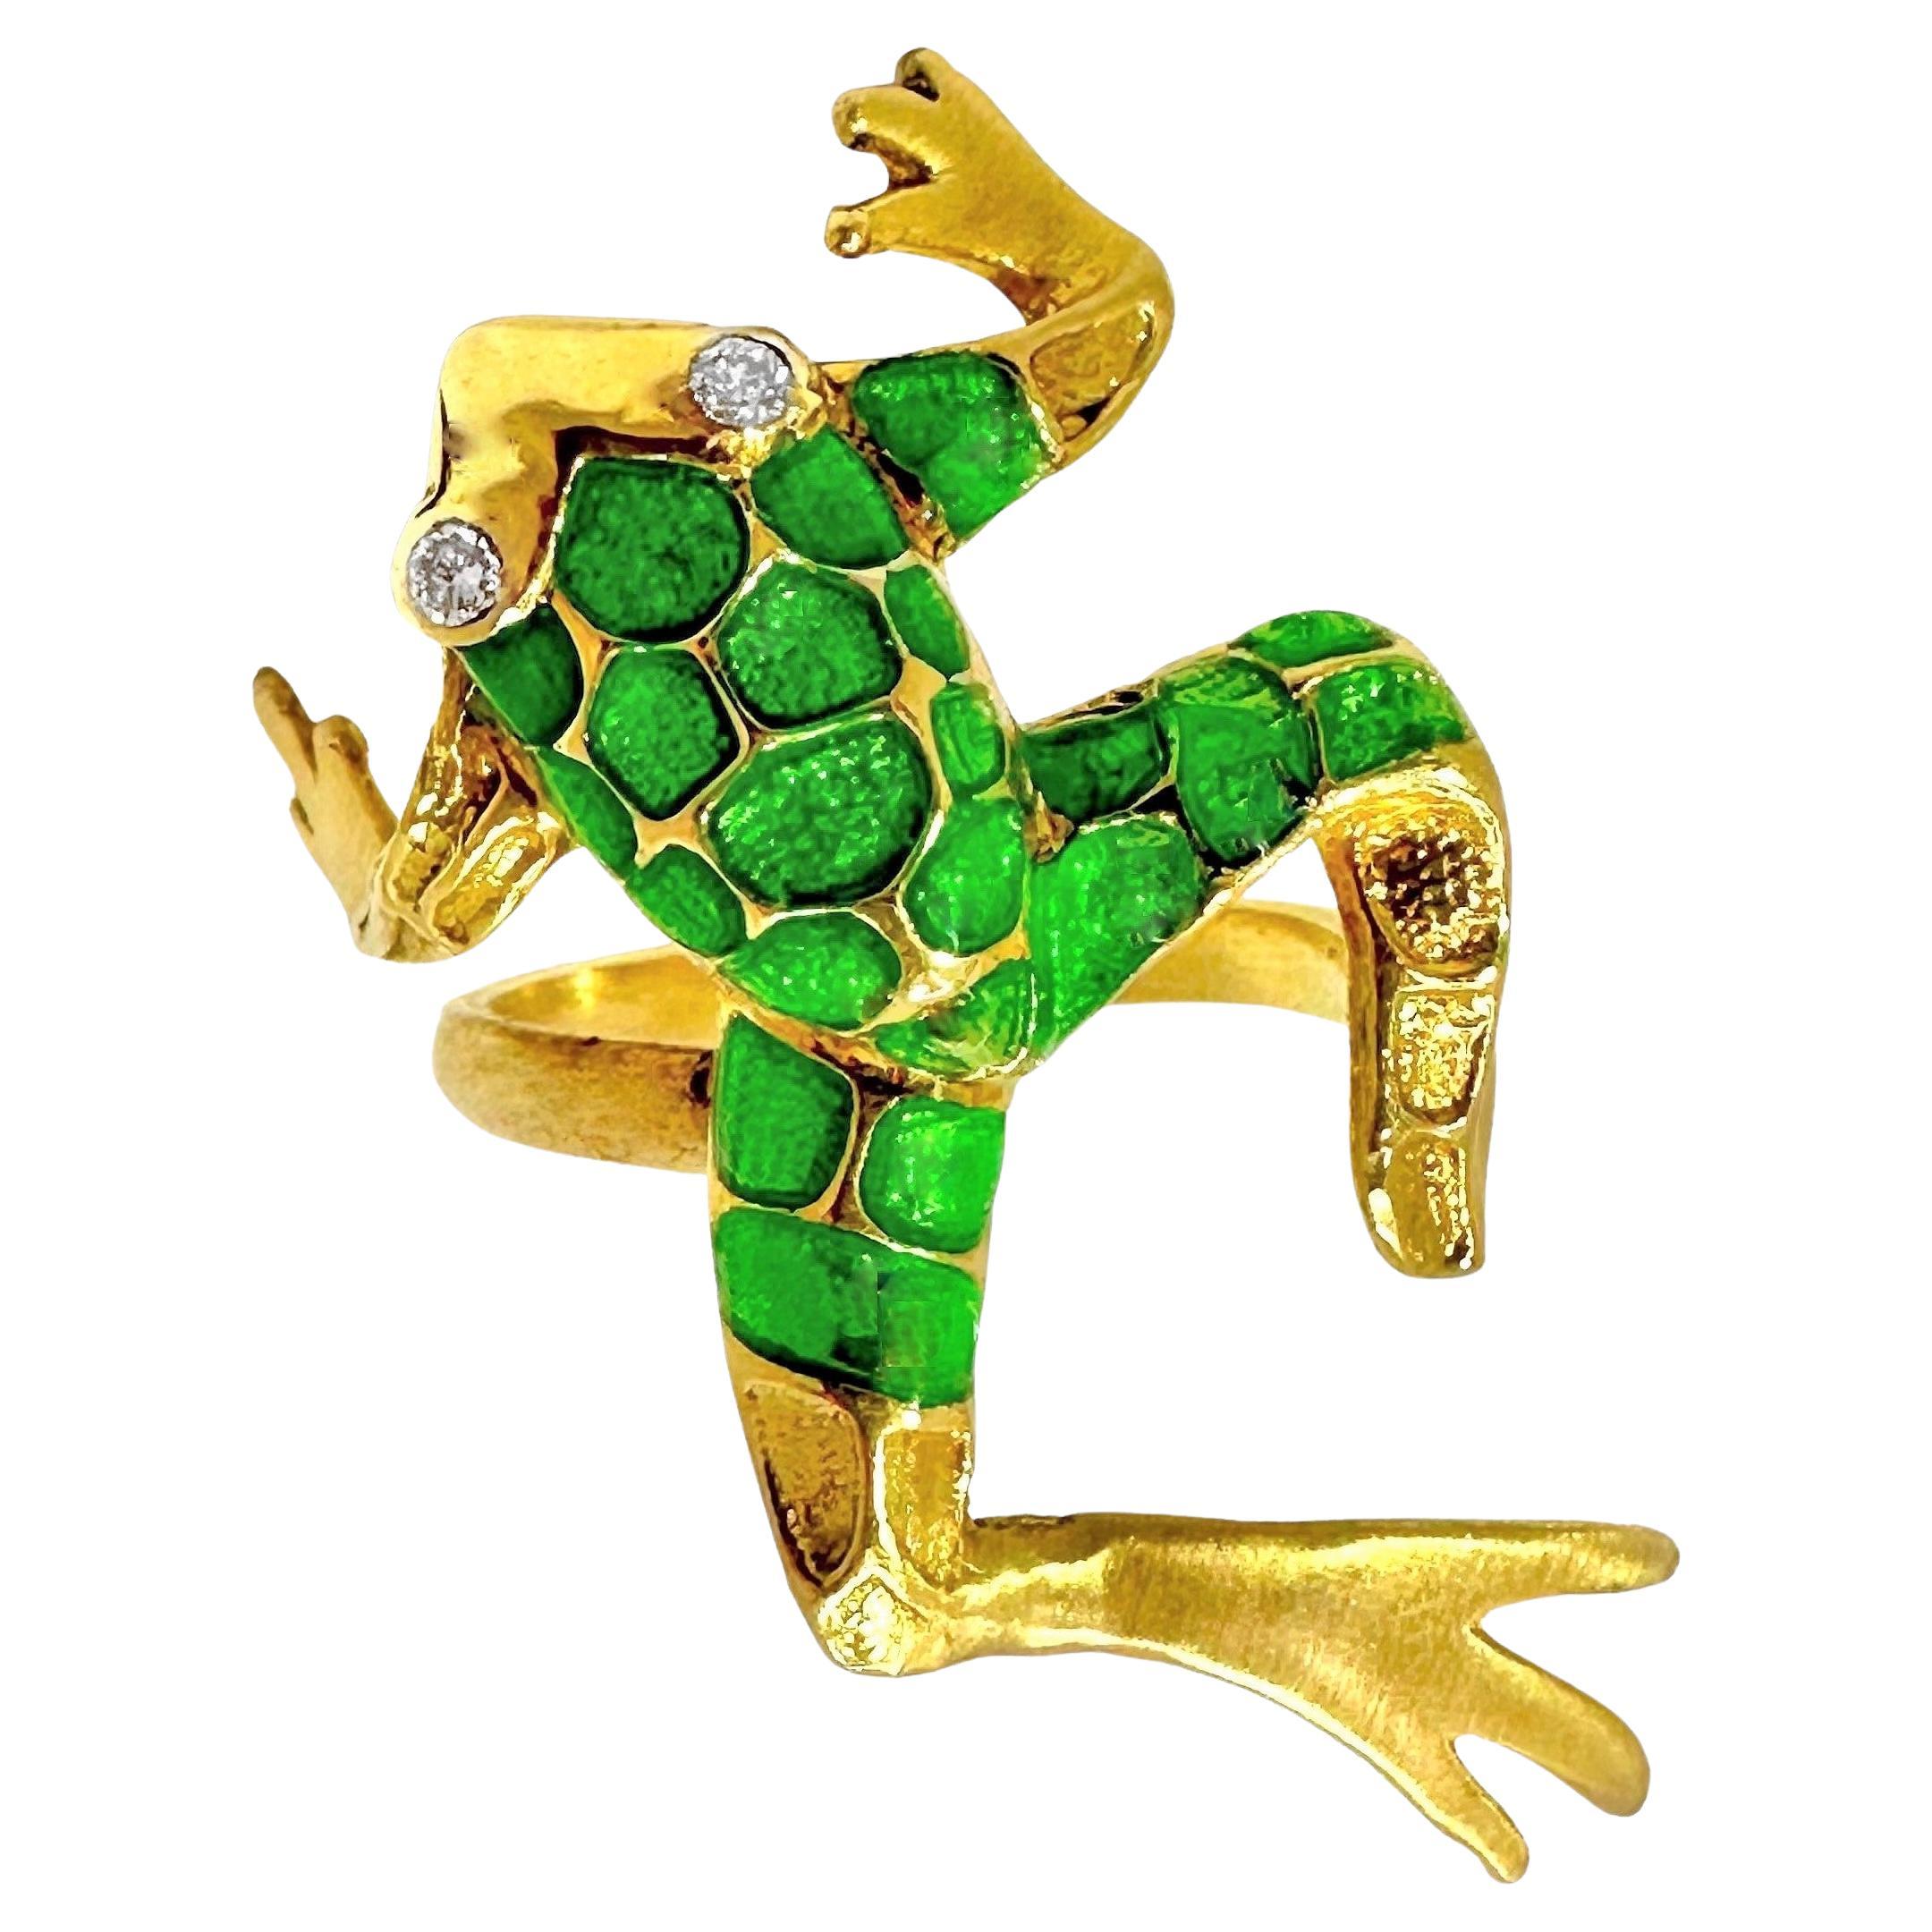 Lifelike Frog Motif Ring in 18K Yellow Gold, Green Enamel and Diamonds